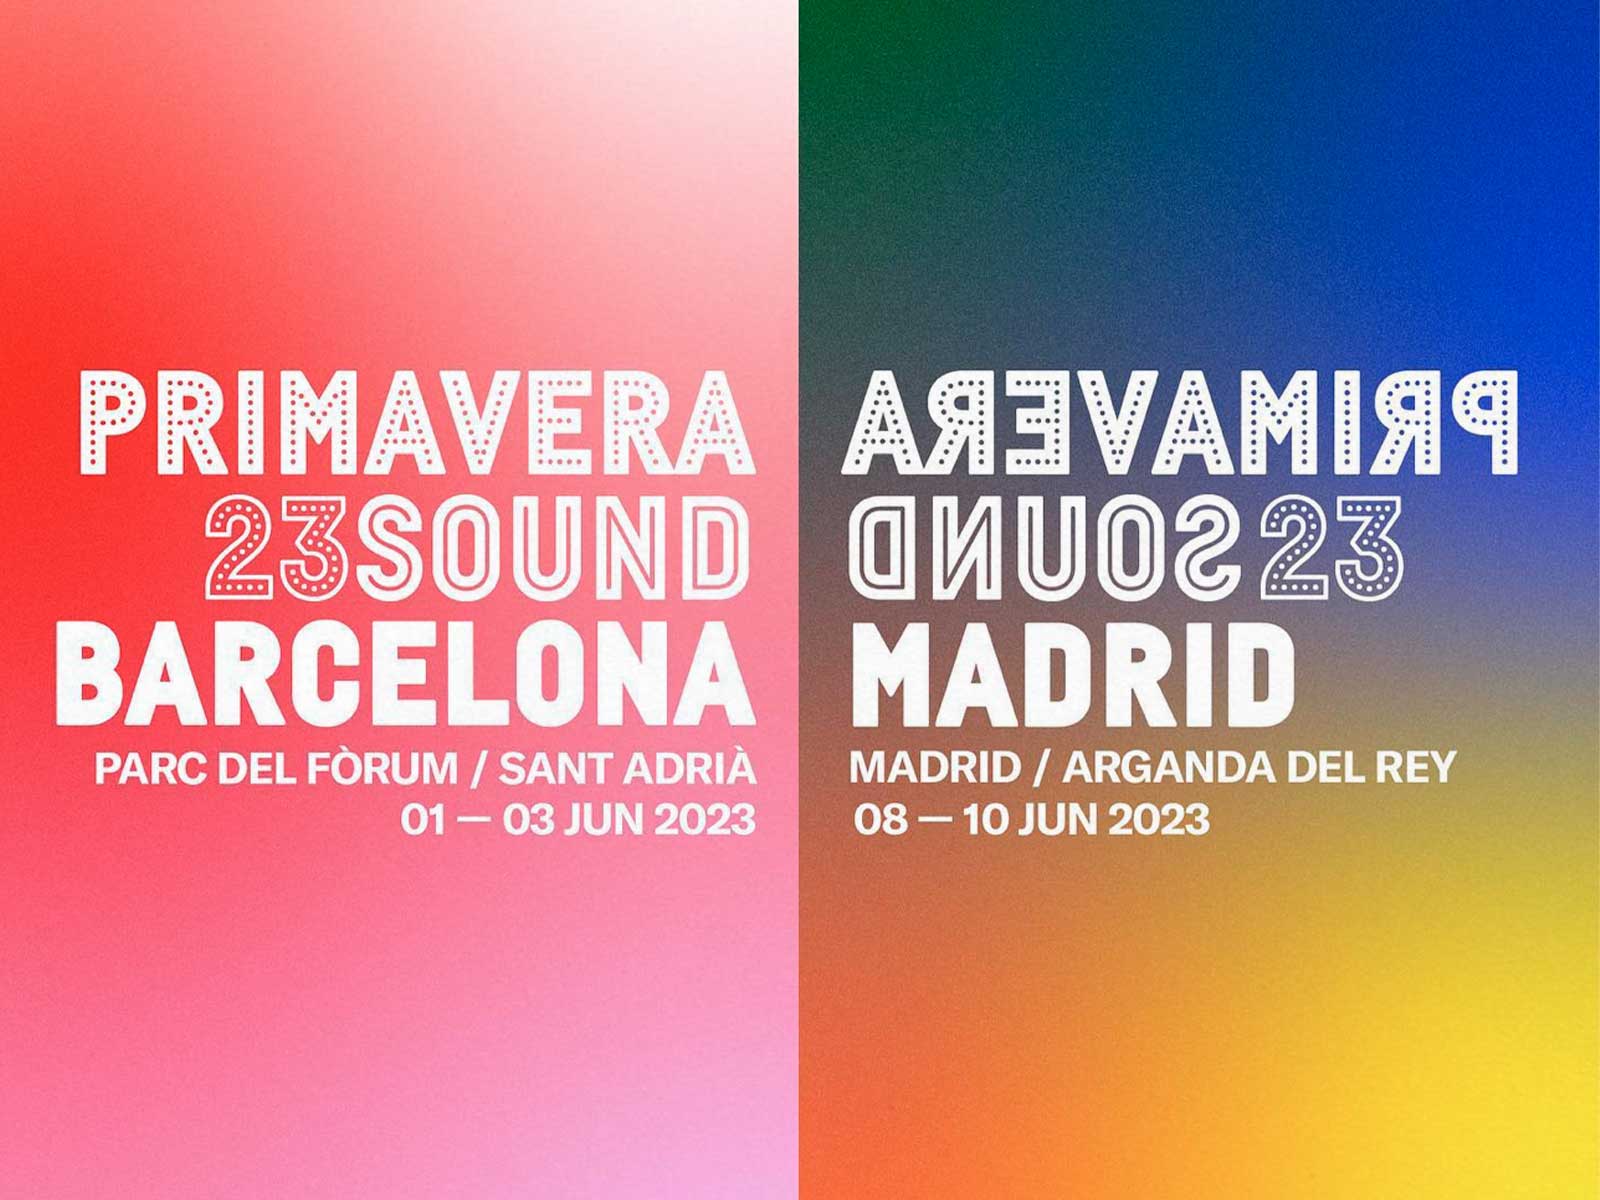 Primavera Sound will have two venues in 2023: Barcelona and Madrid